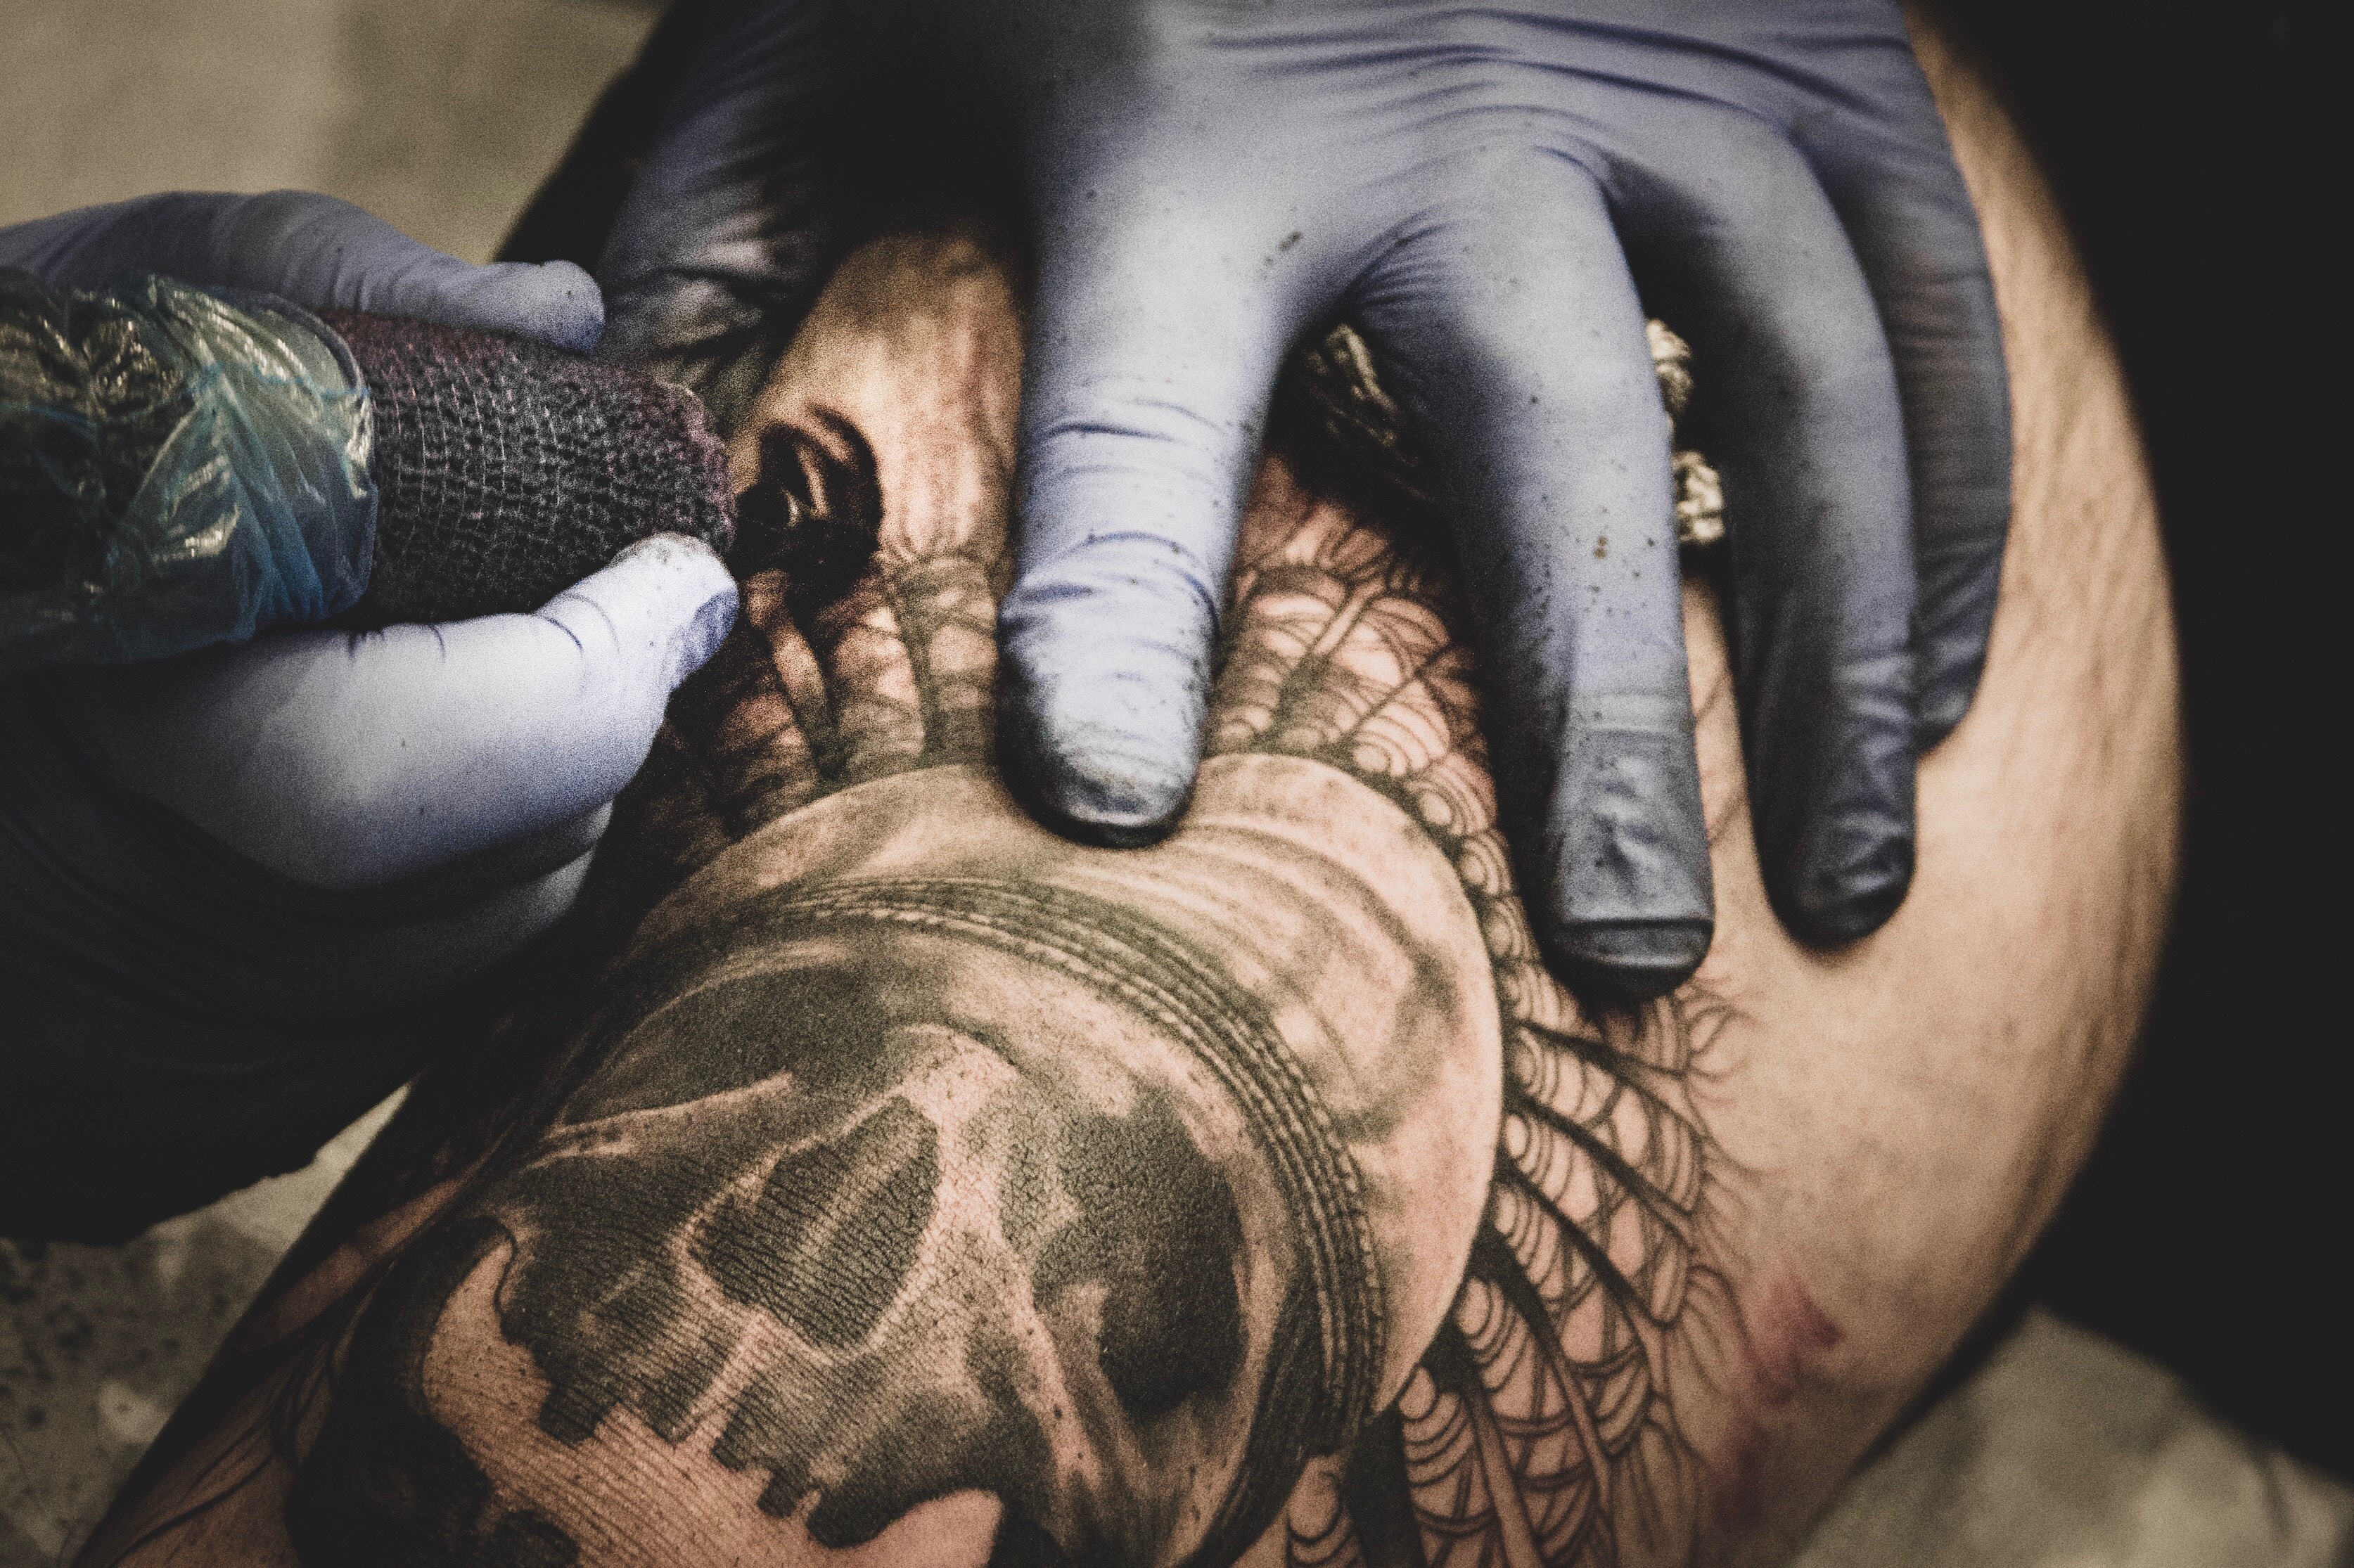 Vegan tattoos: why tattoos aren't always cruelty free